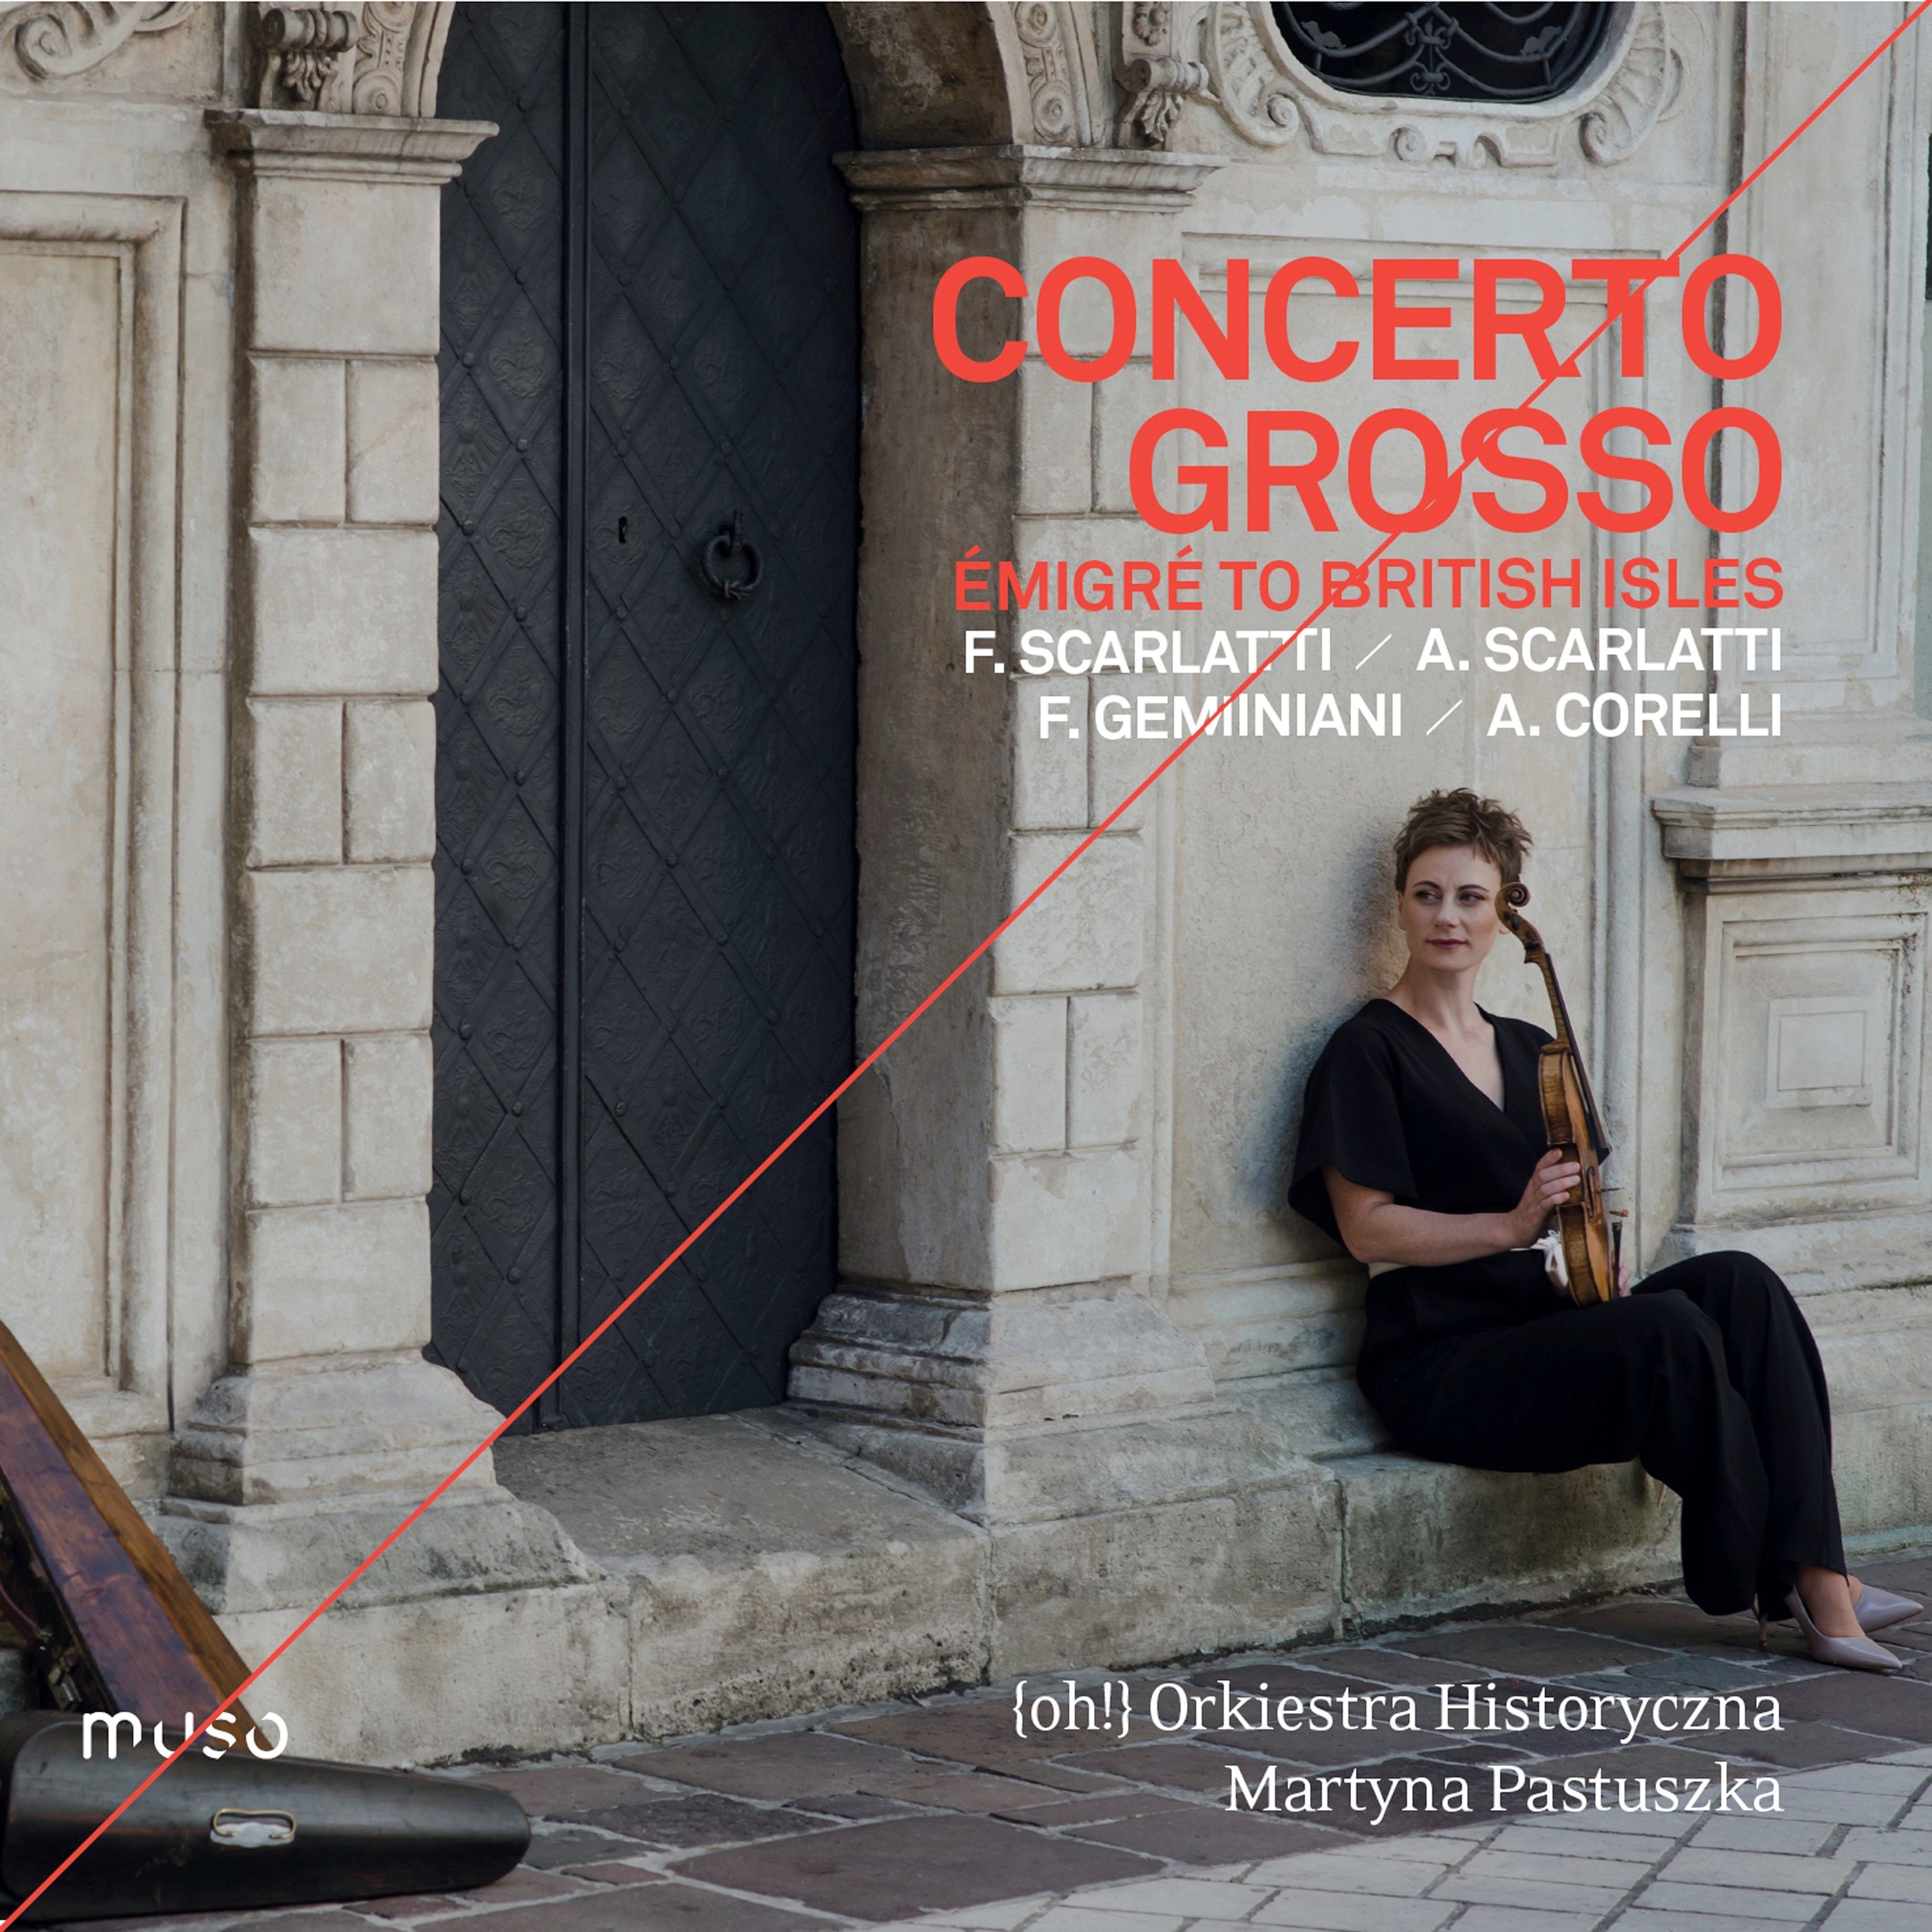 {oh!} Orkiestra Historyczna and Martyna Pastuszka – Concerto grosso "emigre to the British Isles" (2019) [FLAC 24bit/96kHz]